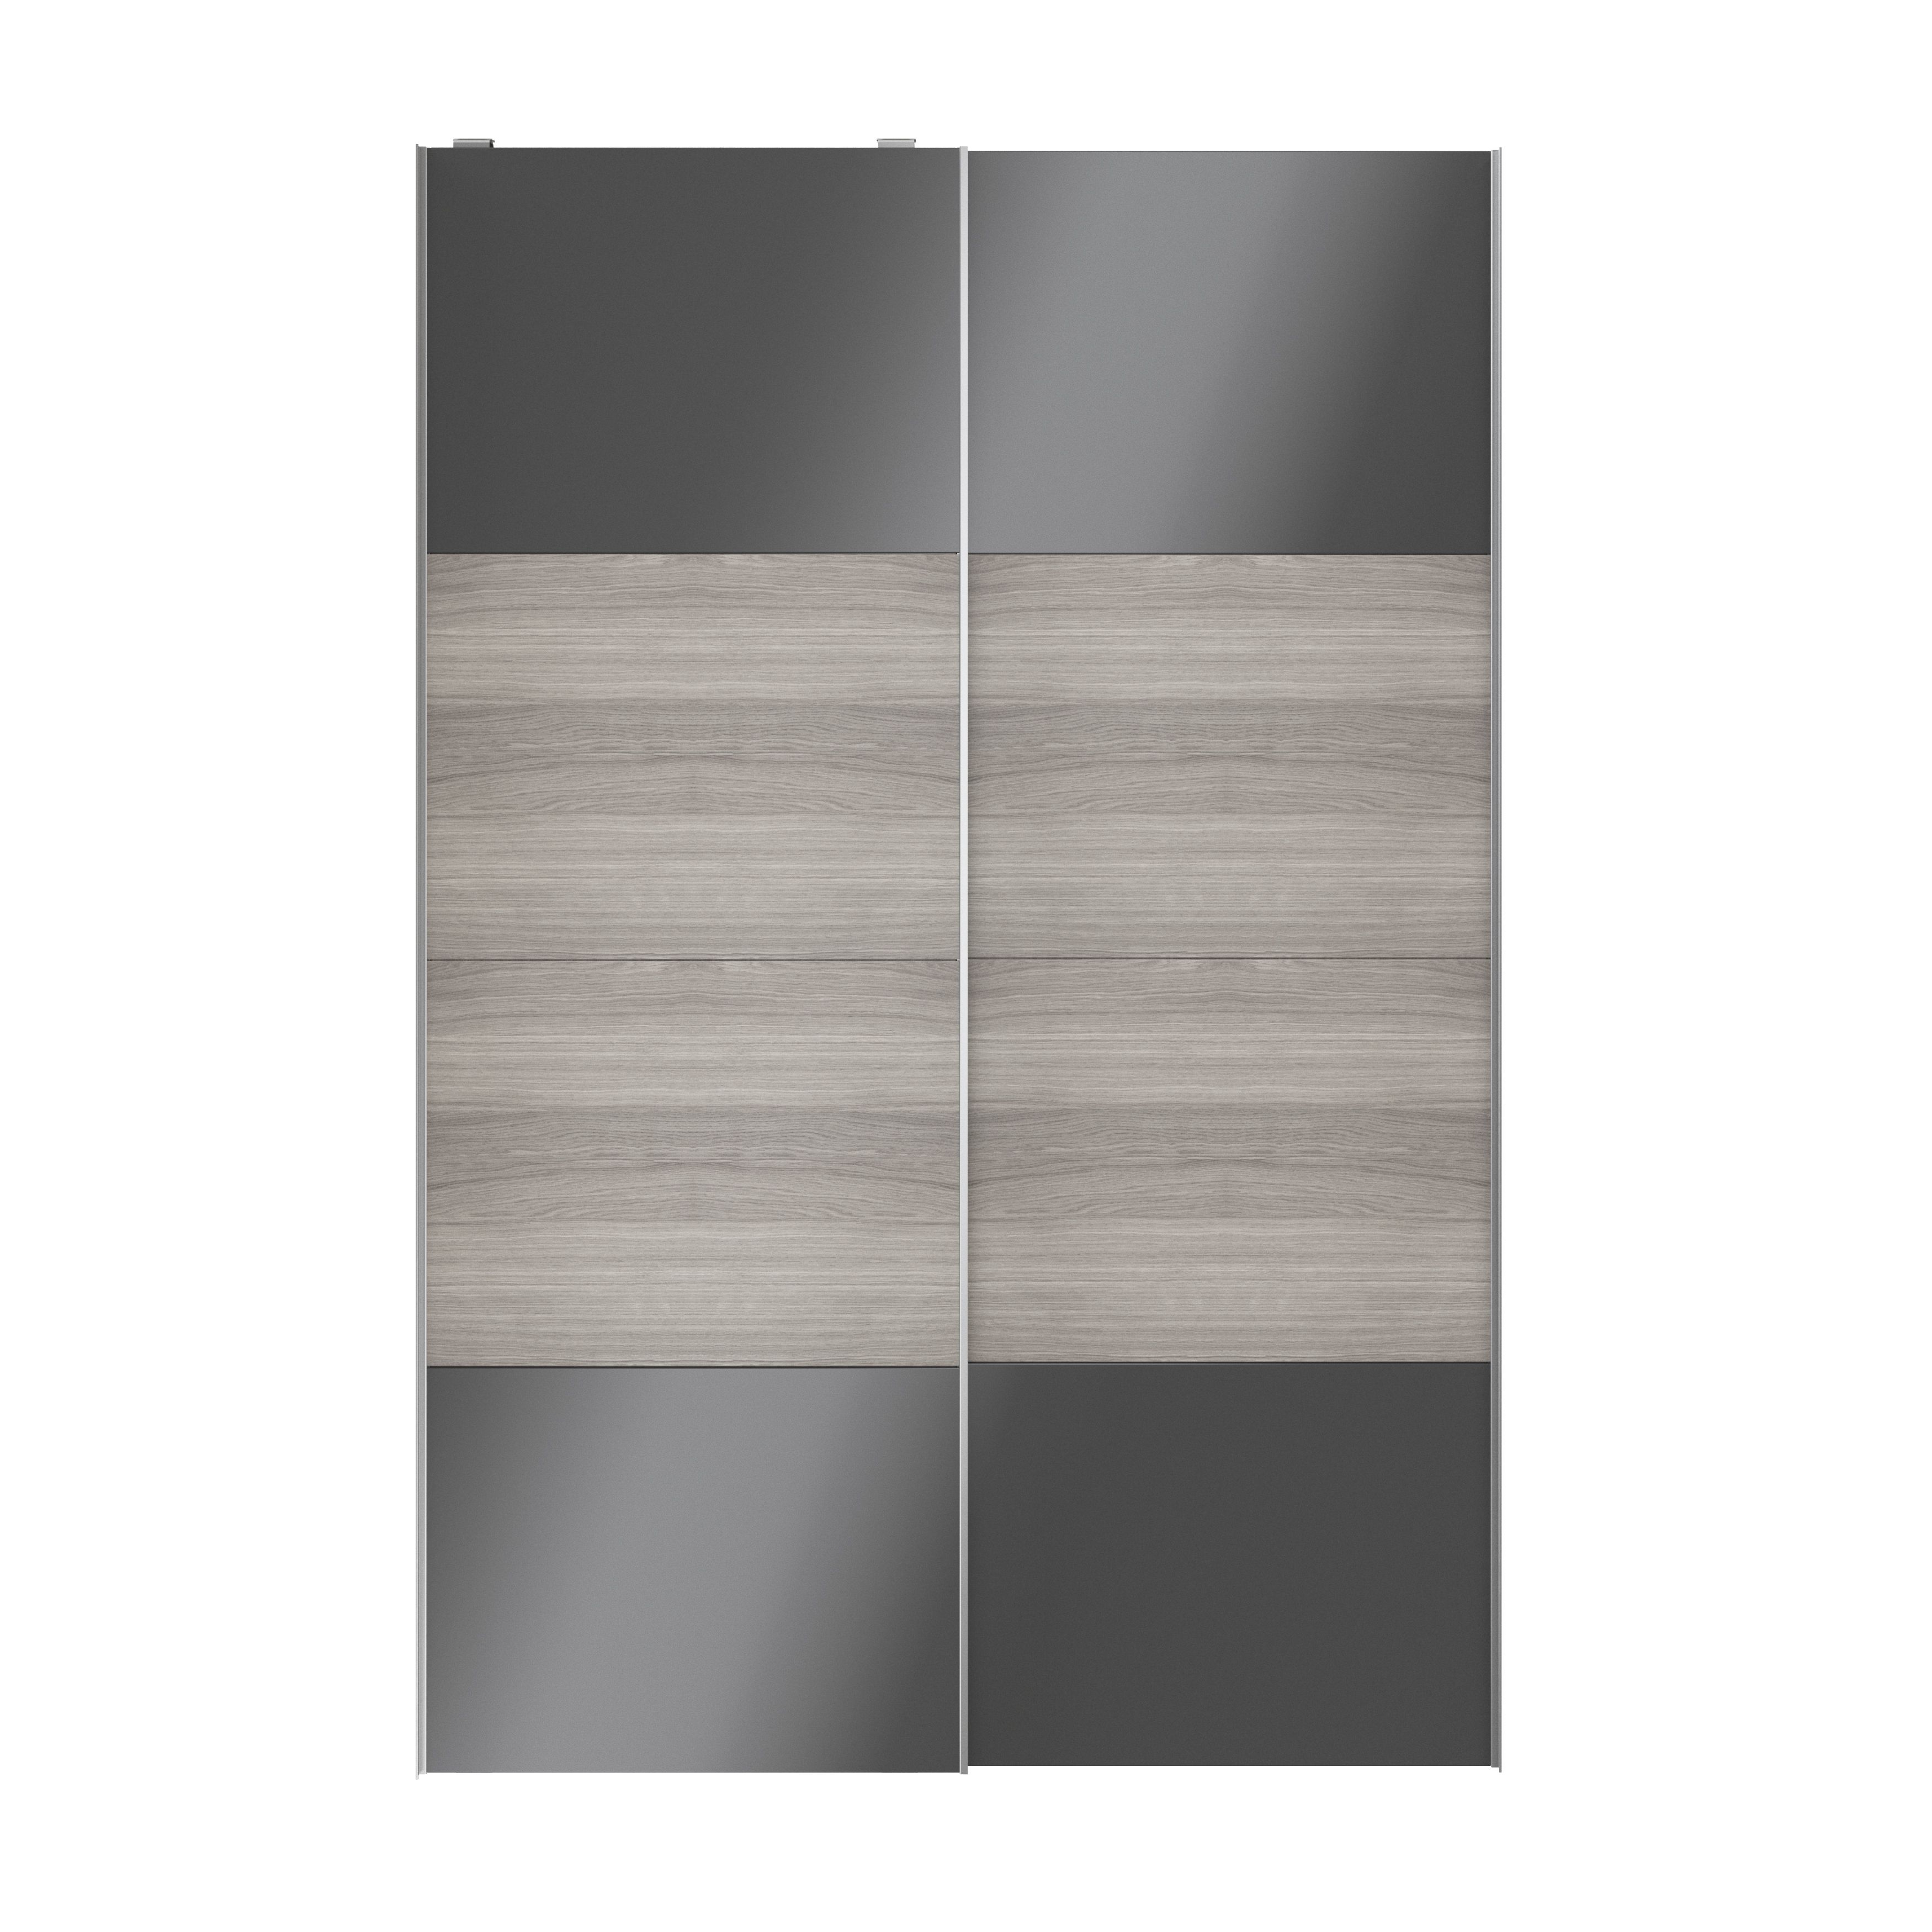 Atomia Panelled Grey & anthracite oak effect High gloss 2 door Sliding Wardrobe Door kit (H)2250mm (W)1500mm